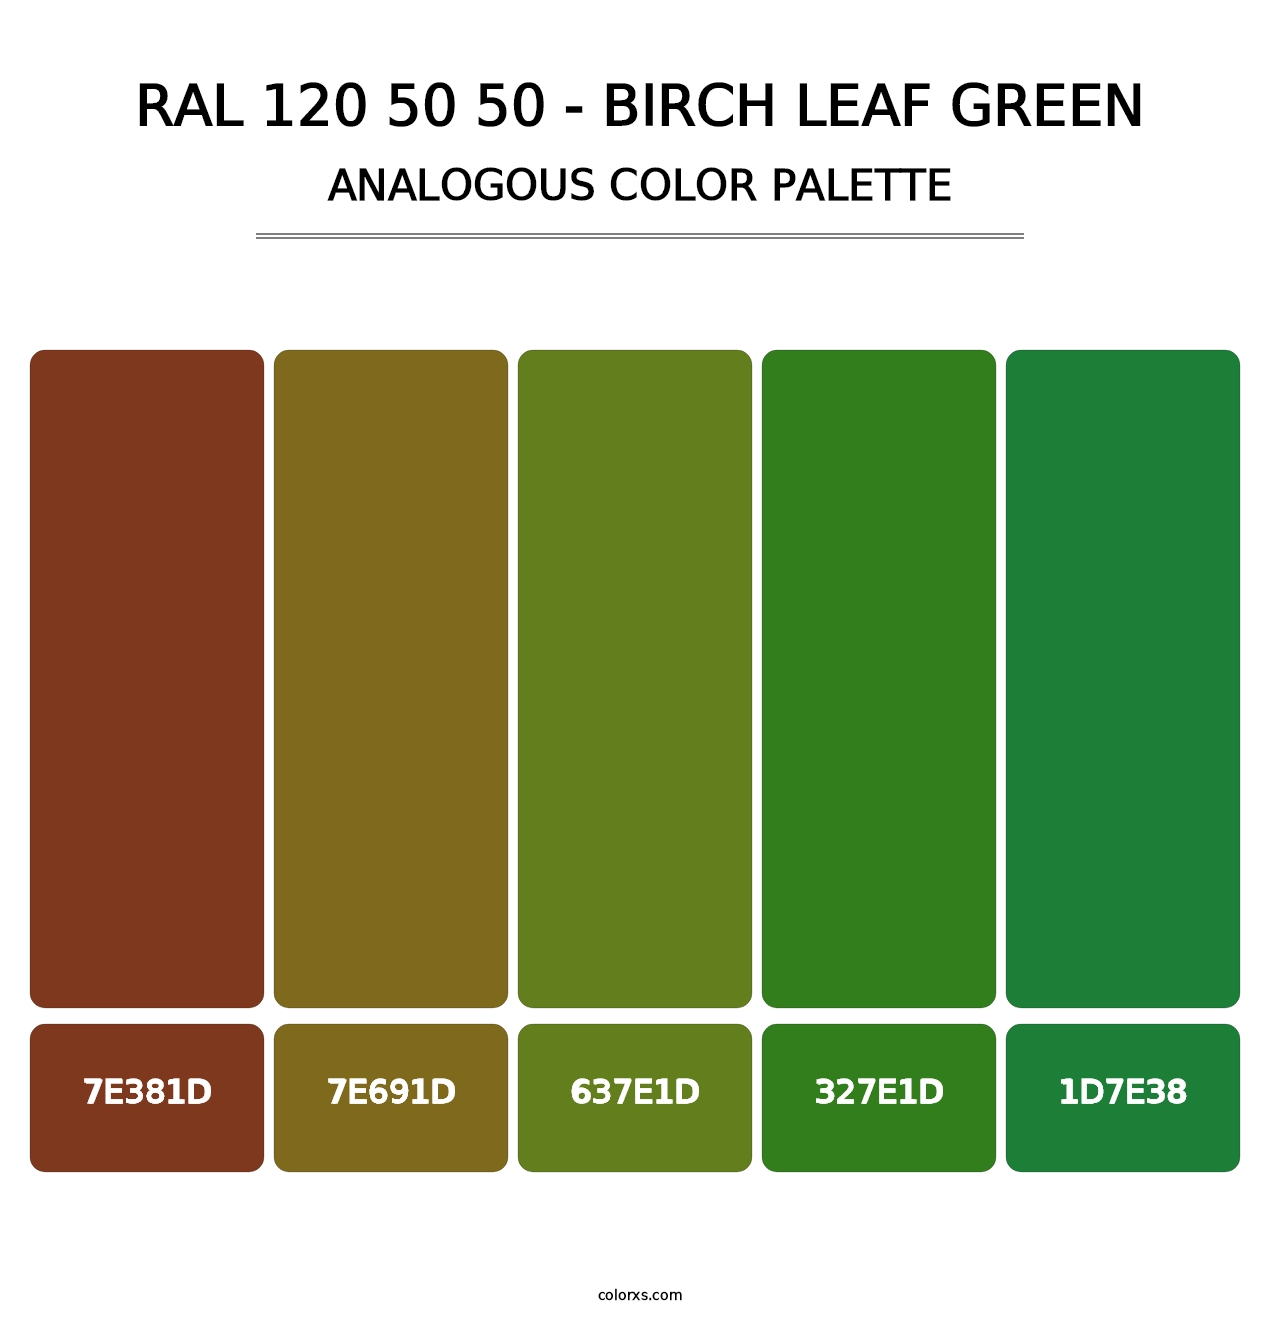 RAL 120 50 50 - Birch Leaf Green - Analogous Color Palette